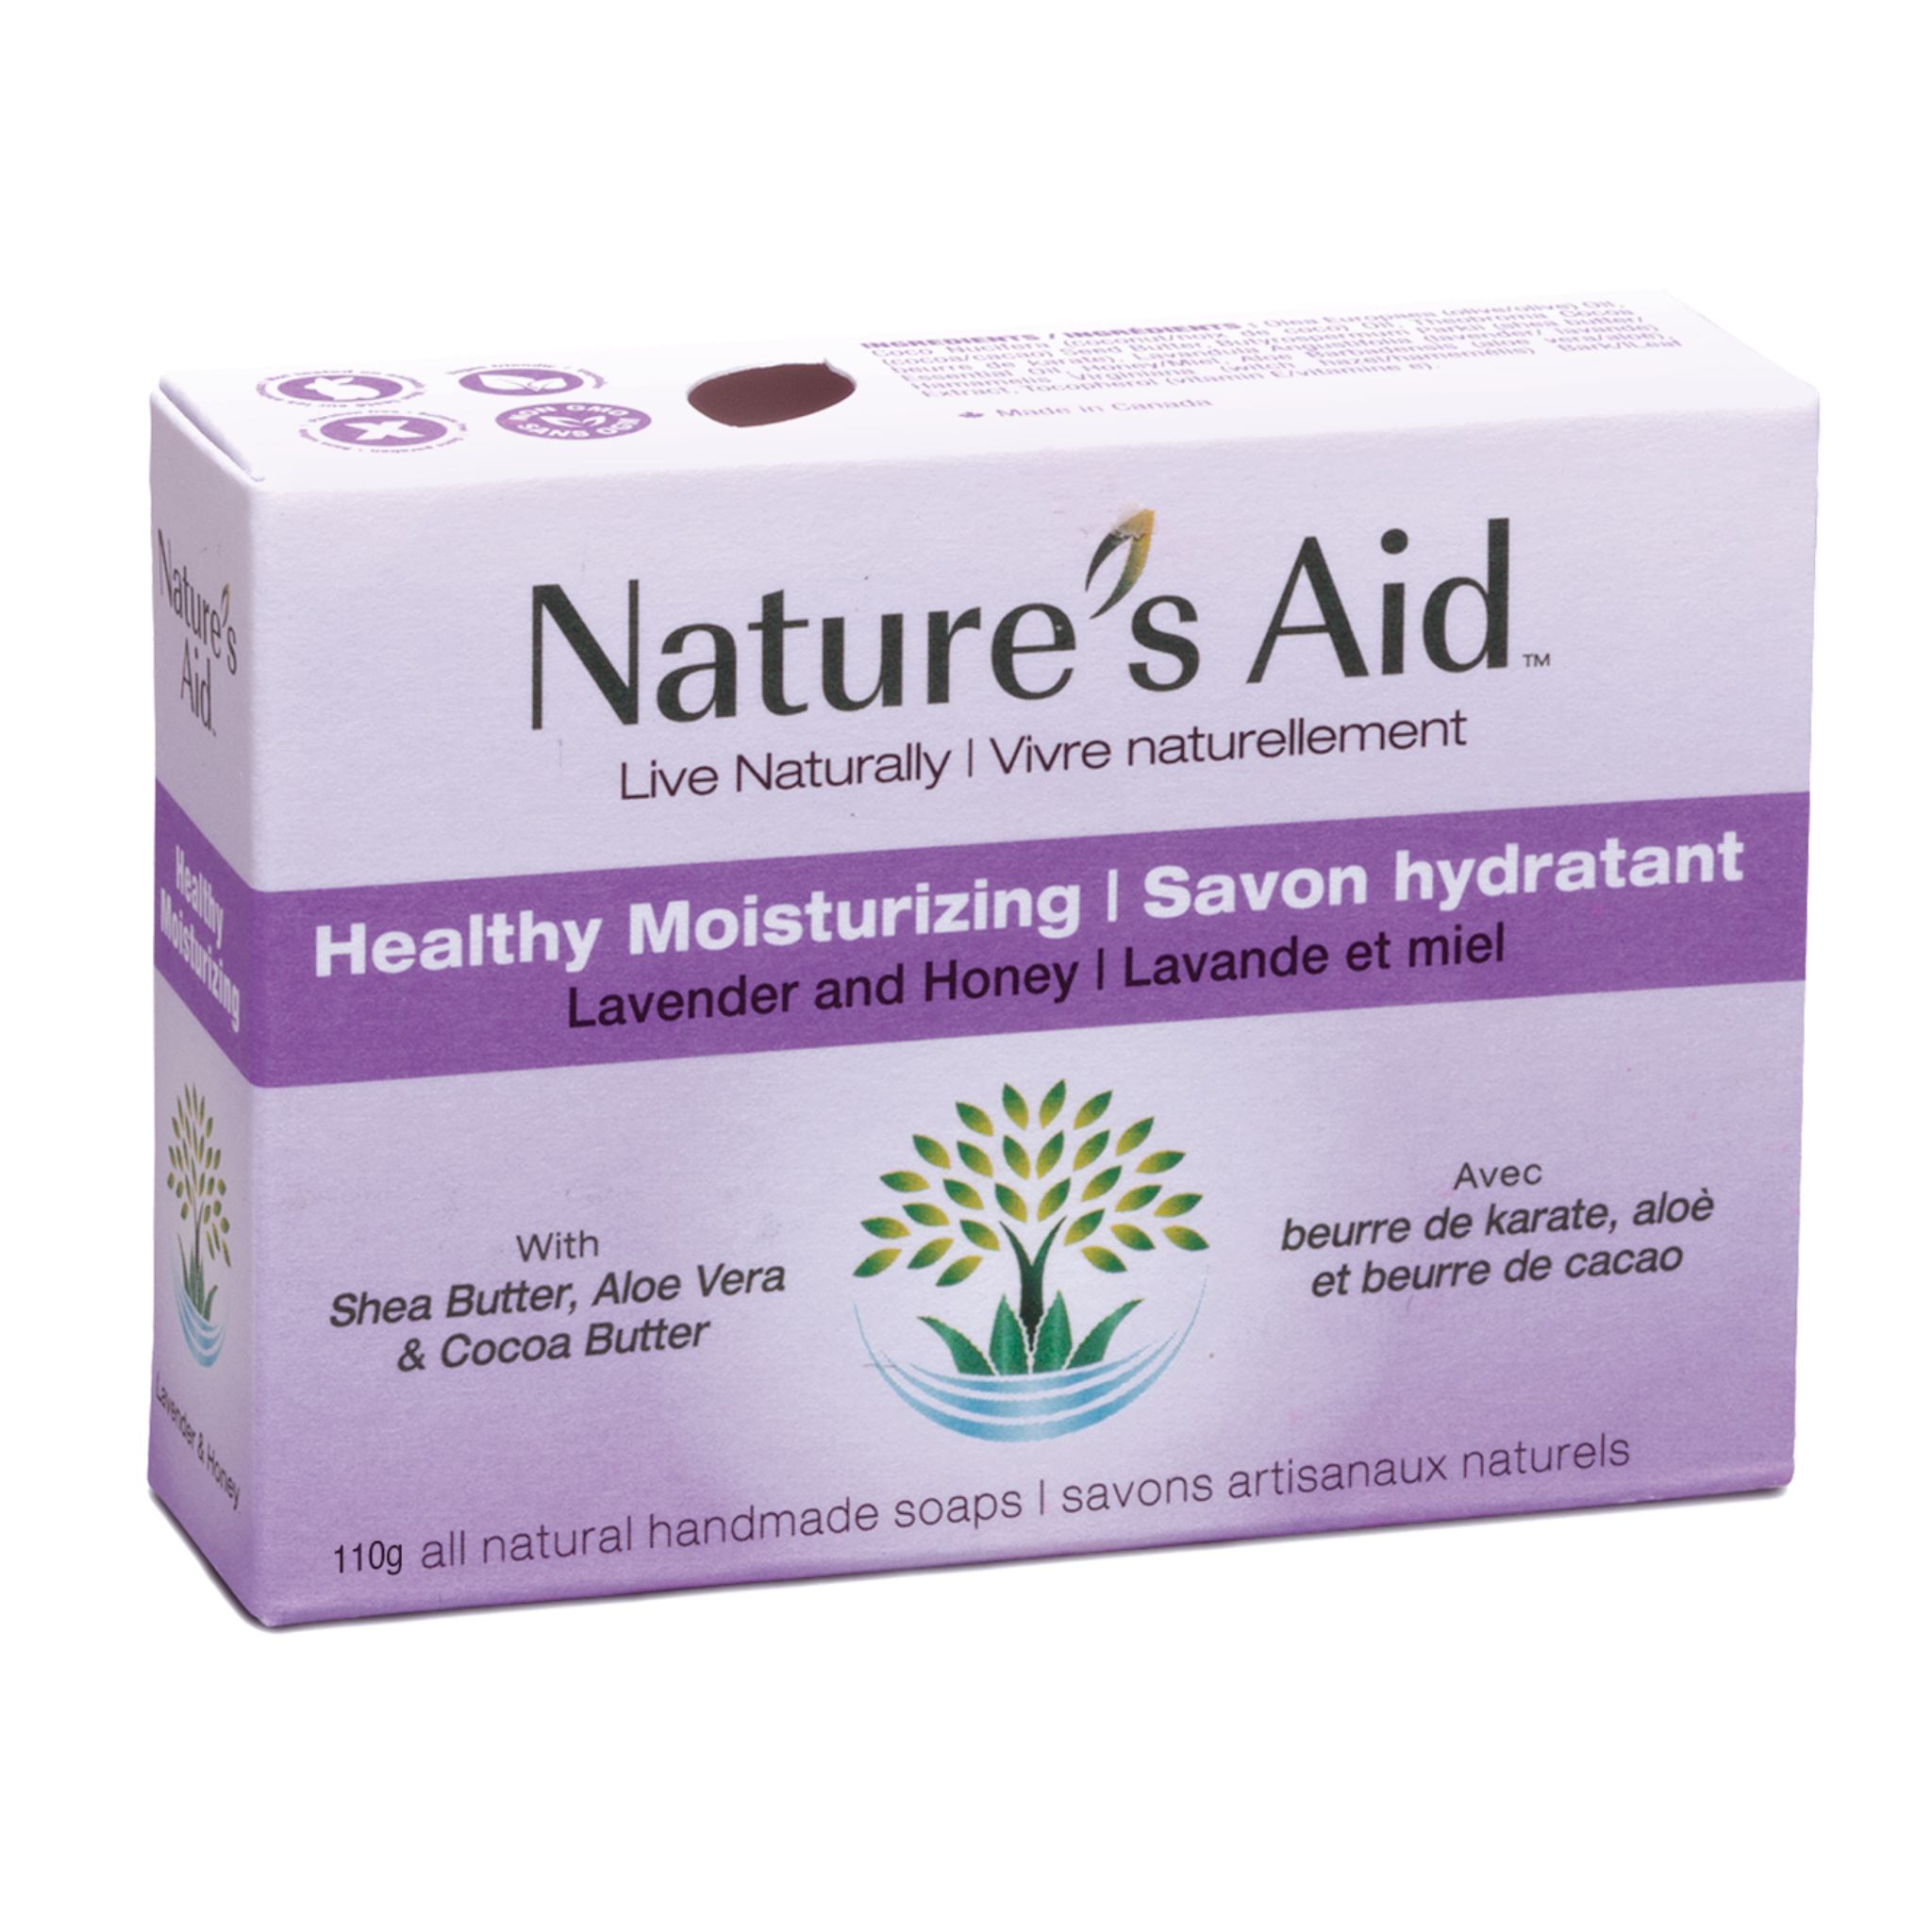 Nature's Aid Lavender & Honey Soap Bar